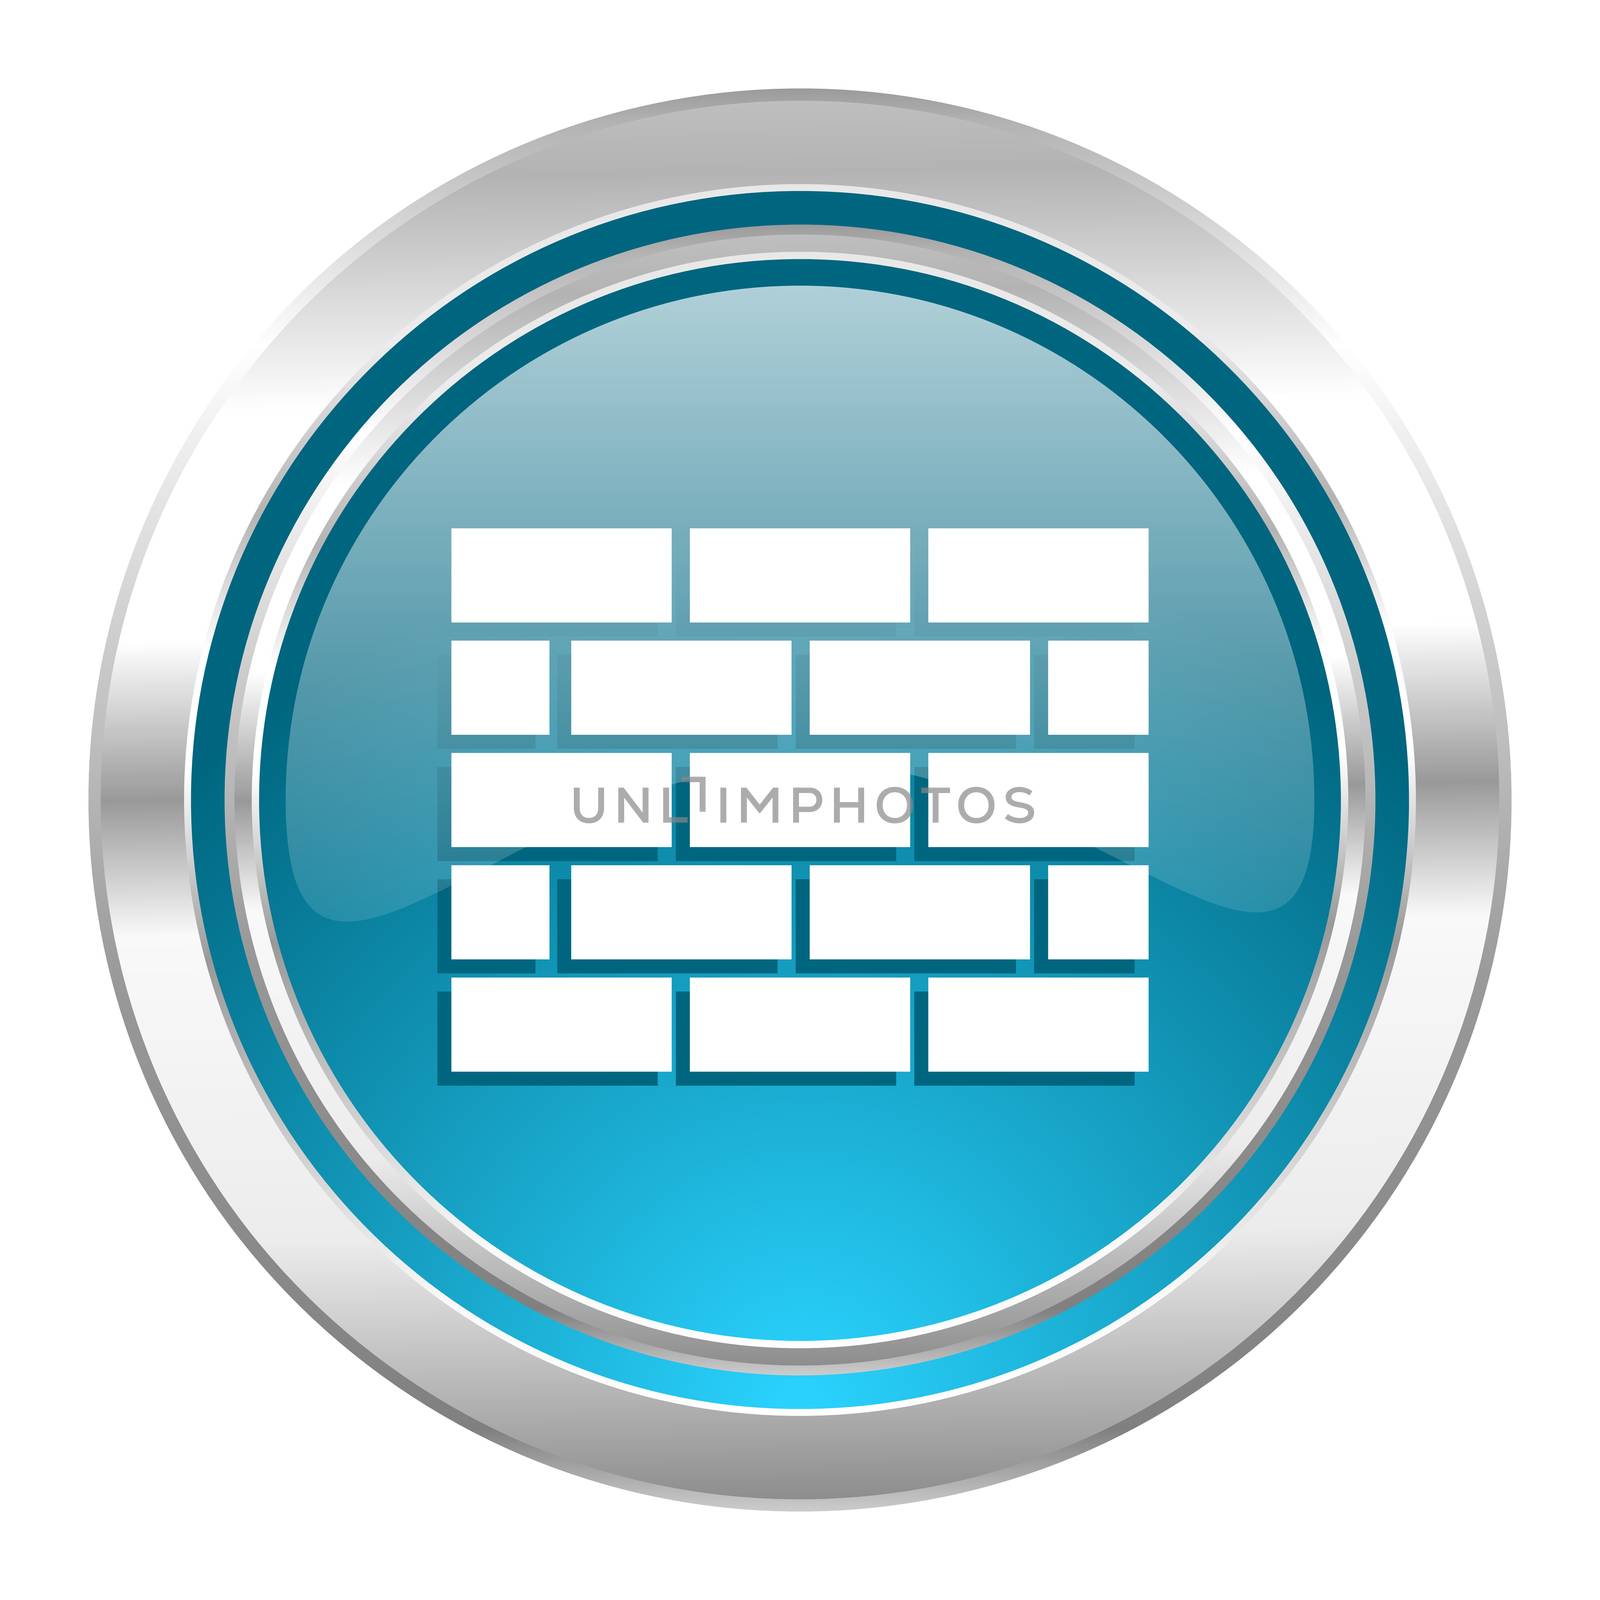 firewall icon, brick wall sign by alexwhite